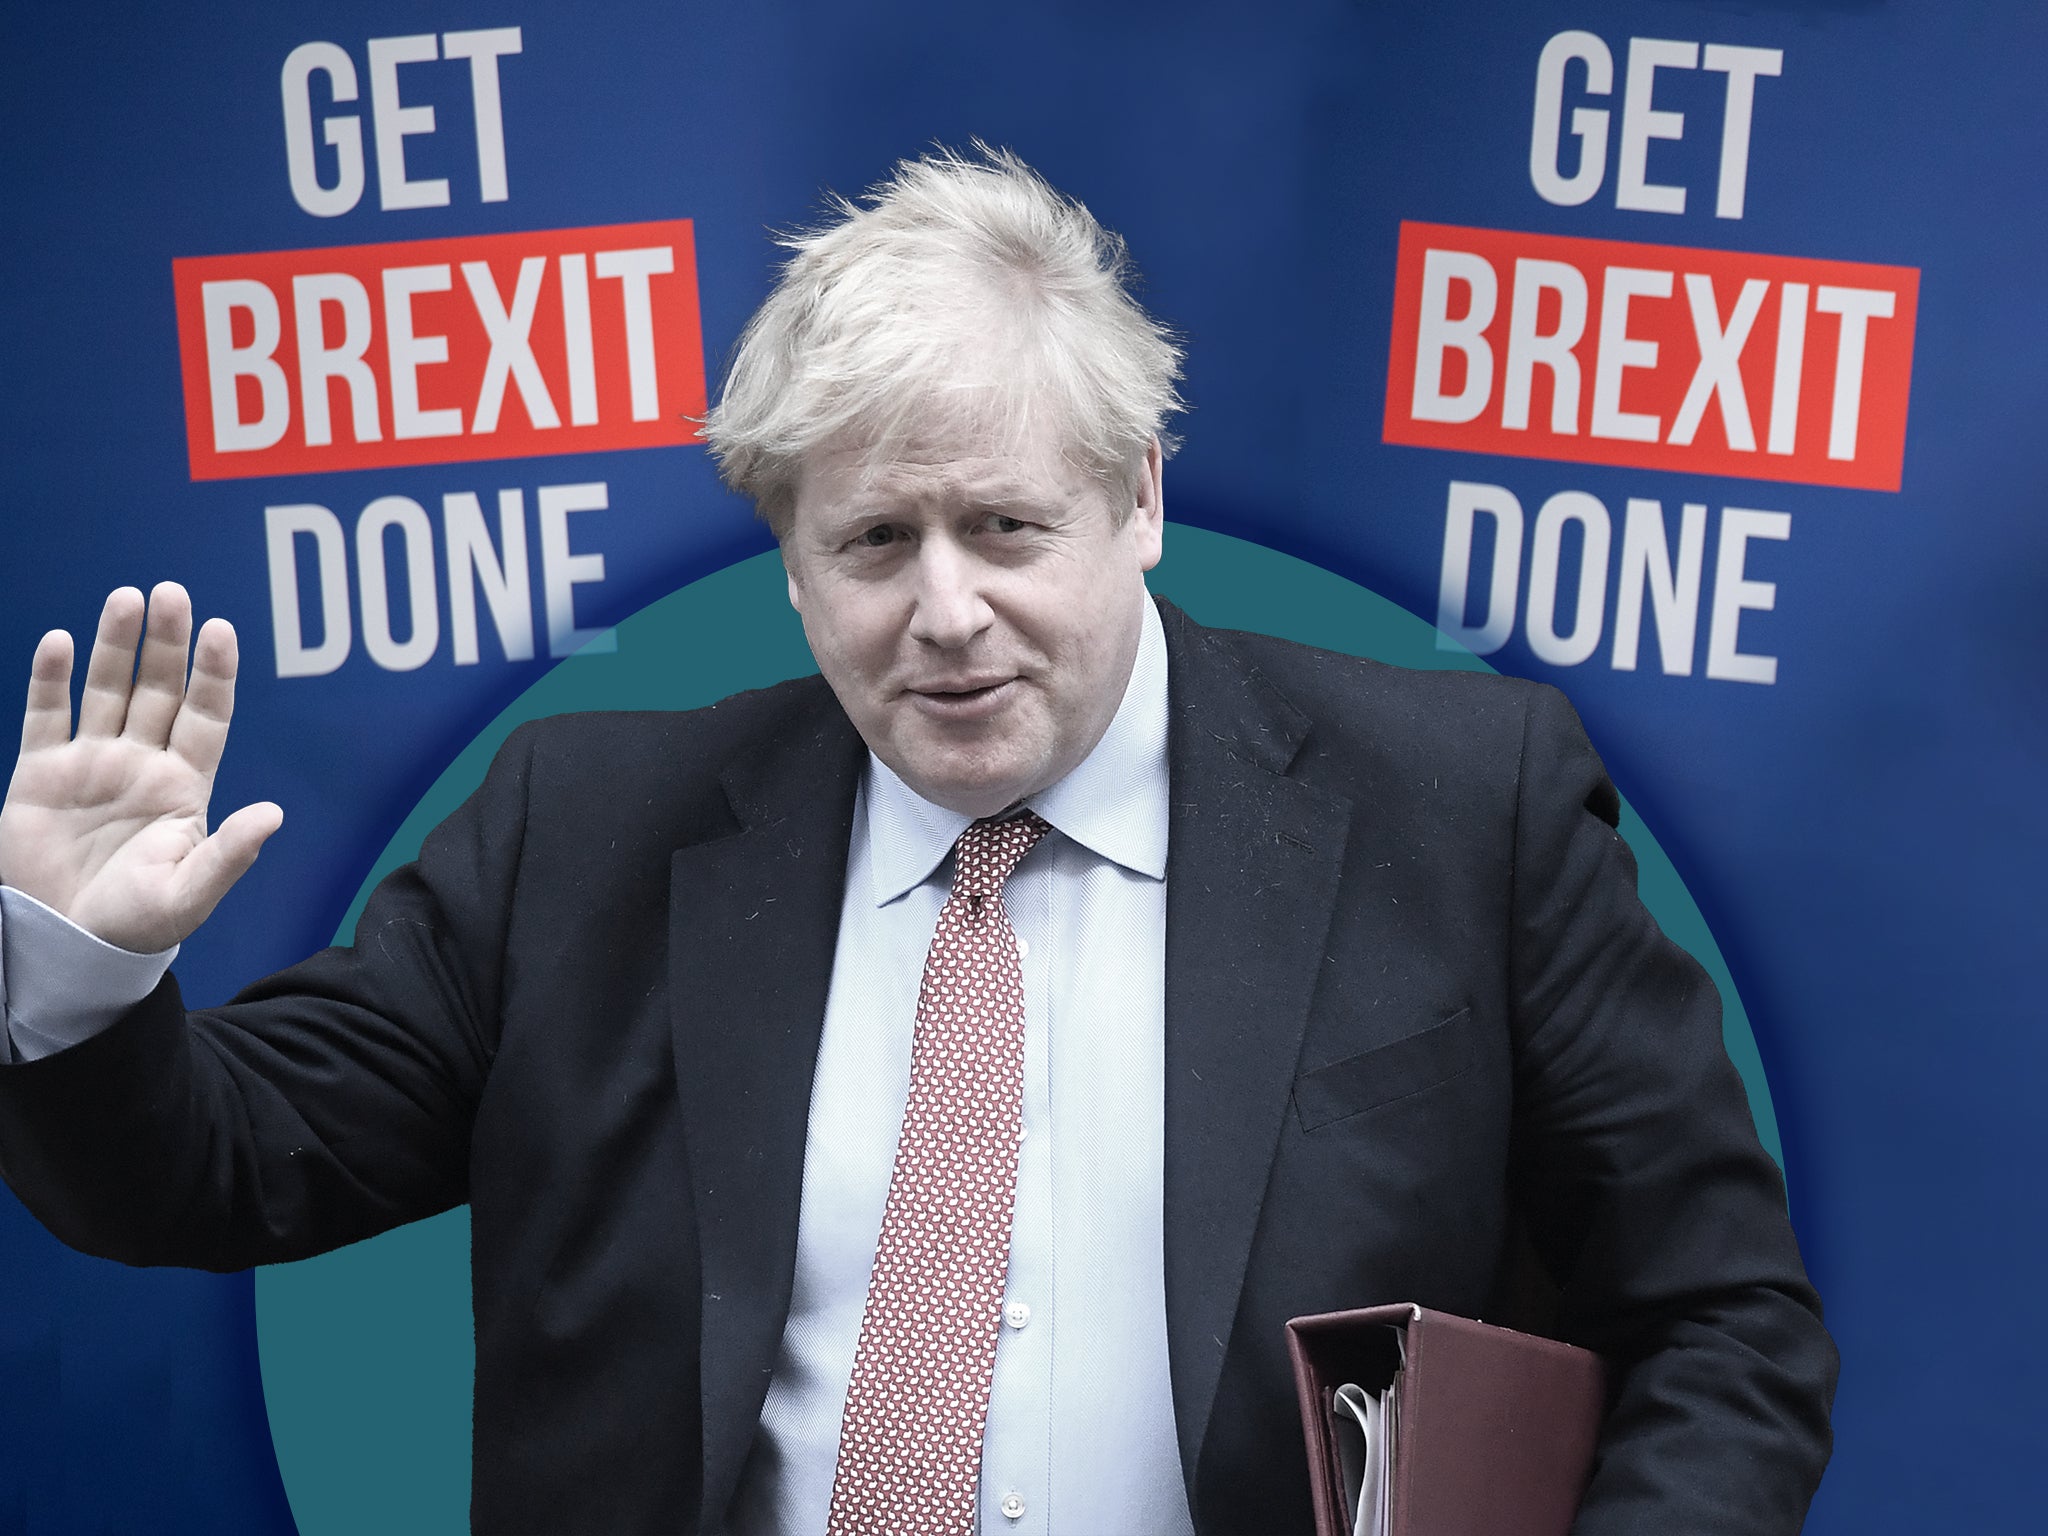 ‘Getting Brexit done’ was Boris Johnson’s major project